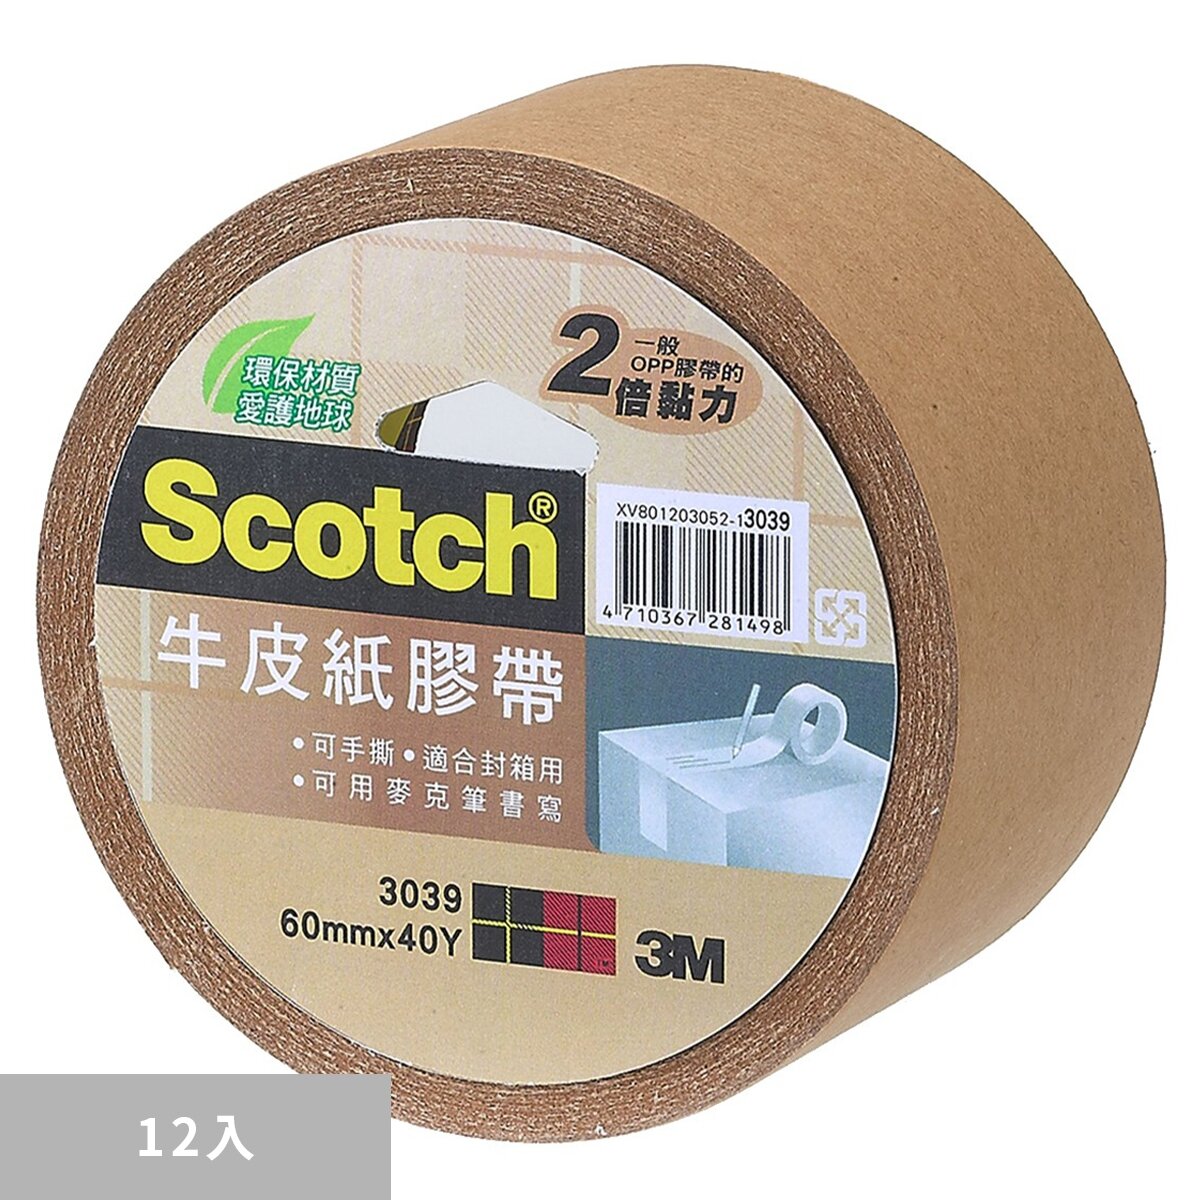 3M Scotch 牛皮紙膠帶 60公釐 X 40碼 X 12入 3039